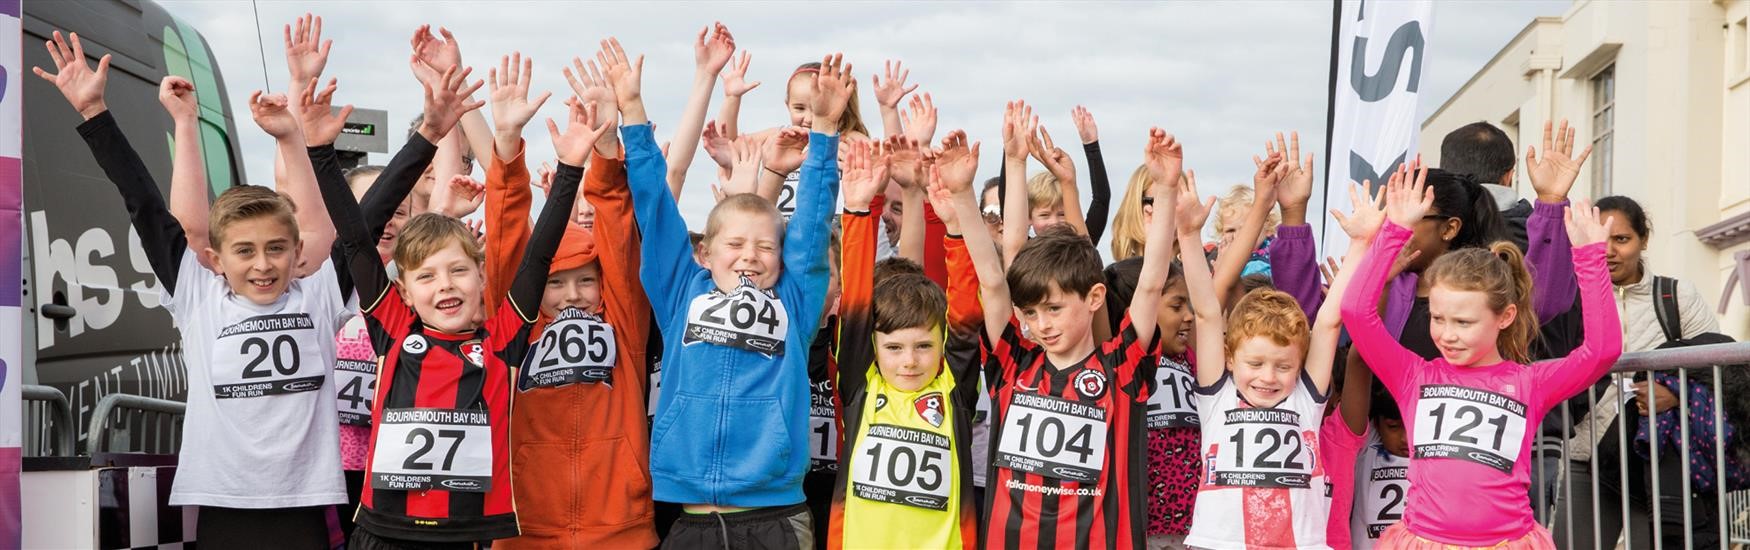 Kids ready for their marathon at Bournemouth's Bay Run